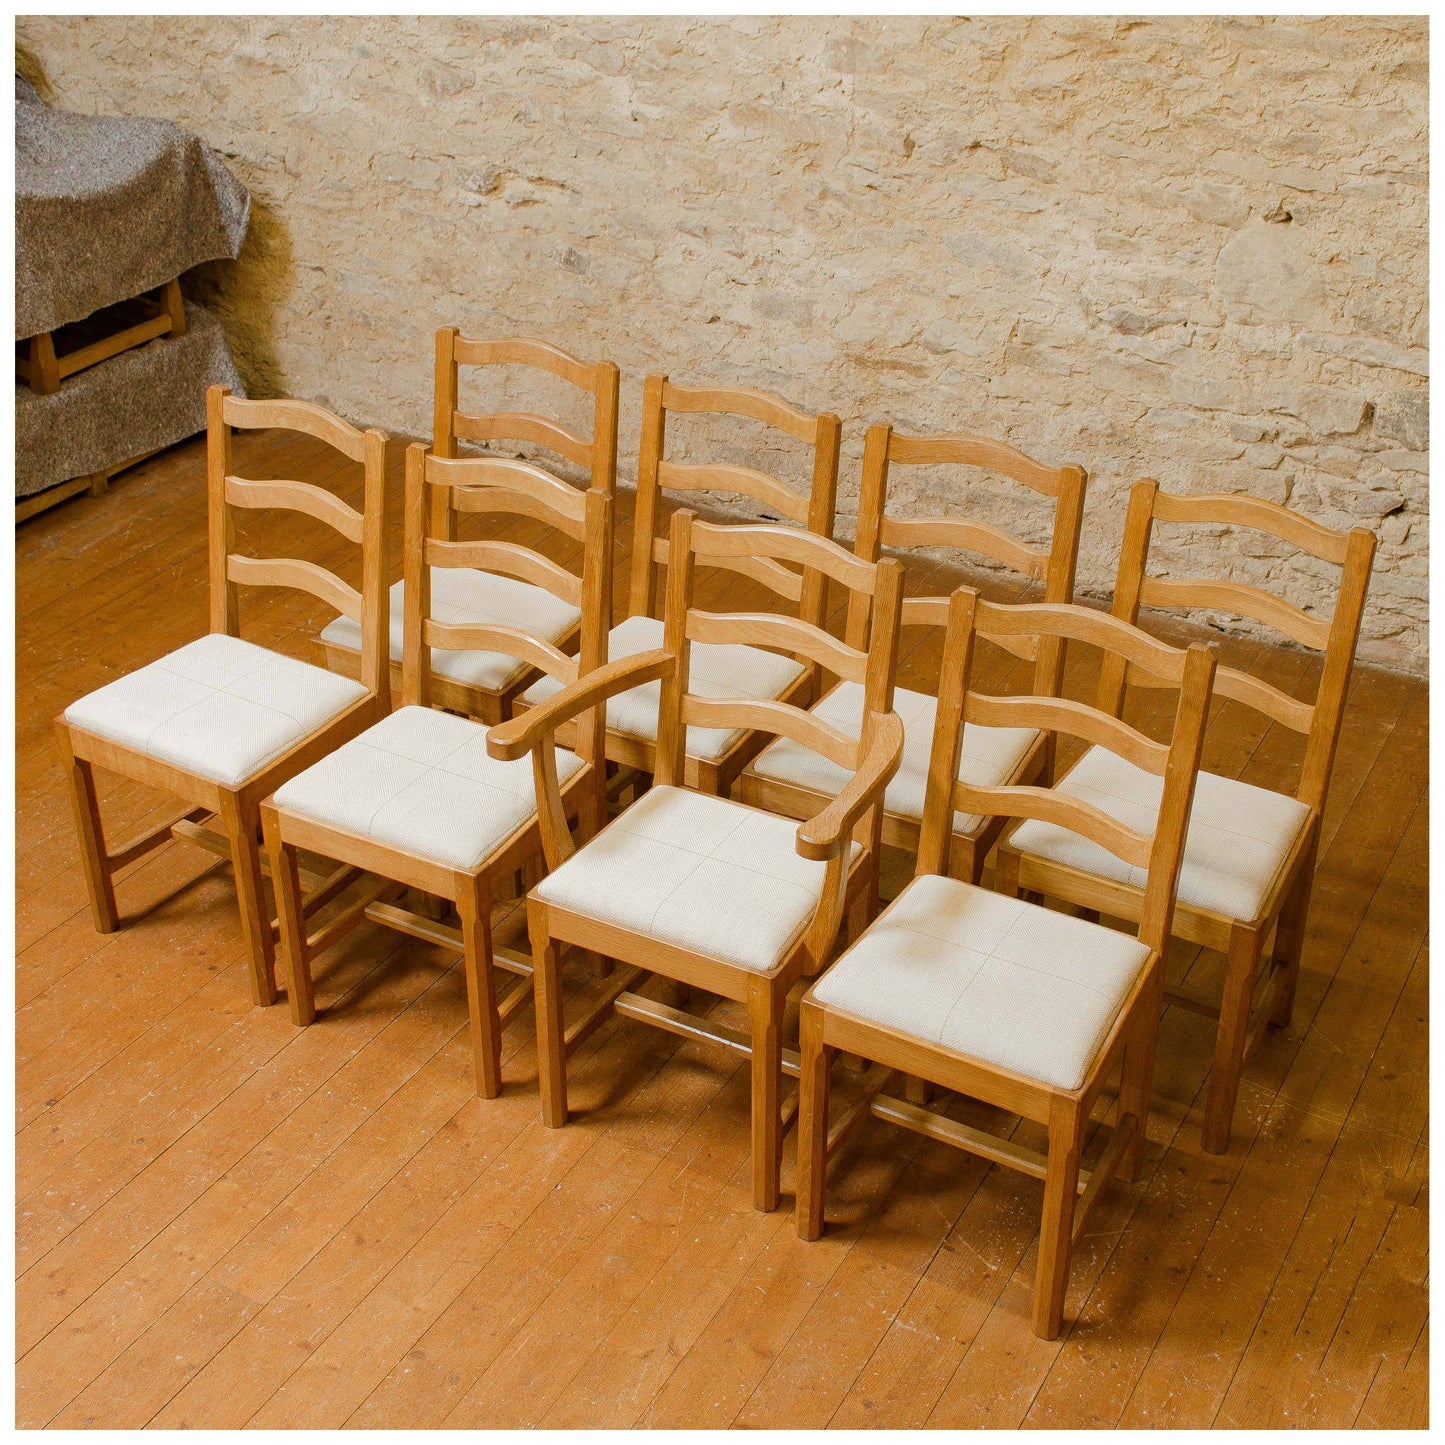 Acornman (Ex-Mouseman) Arts & Crafts Yorkshire School English Oak Chairs 1960